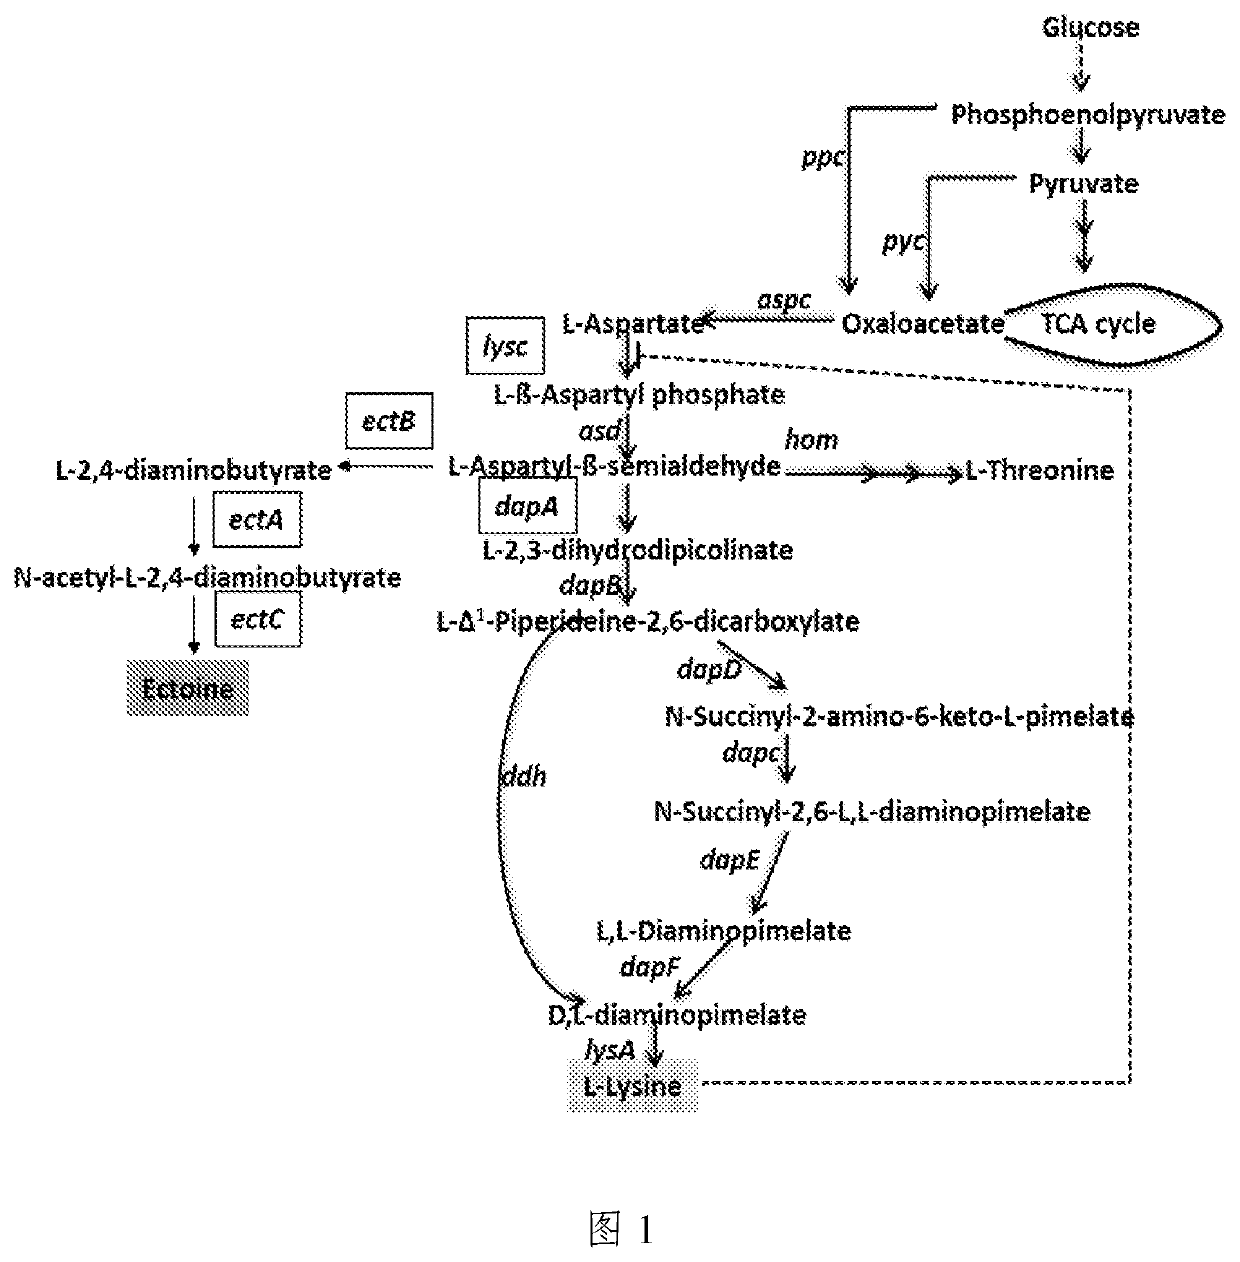 Method for producing tetrahydropyrimidine by fermenting recombinant corynebacterium glutamicum